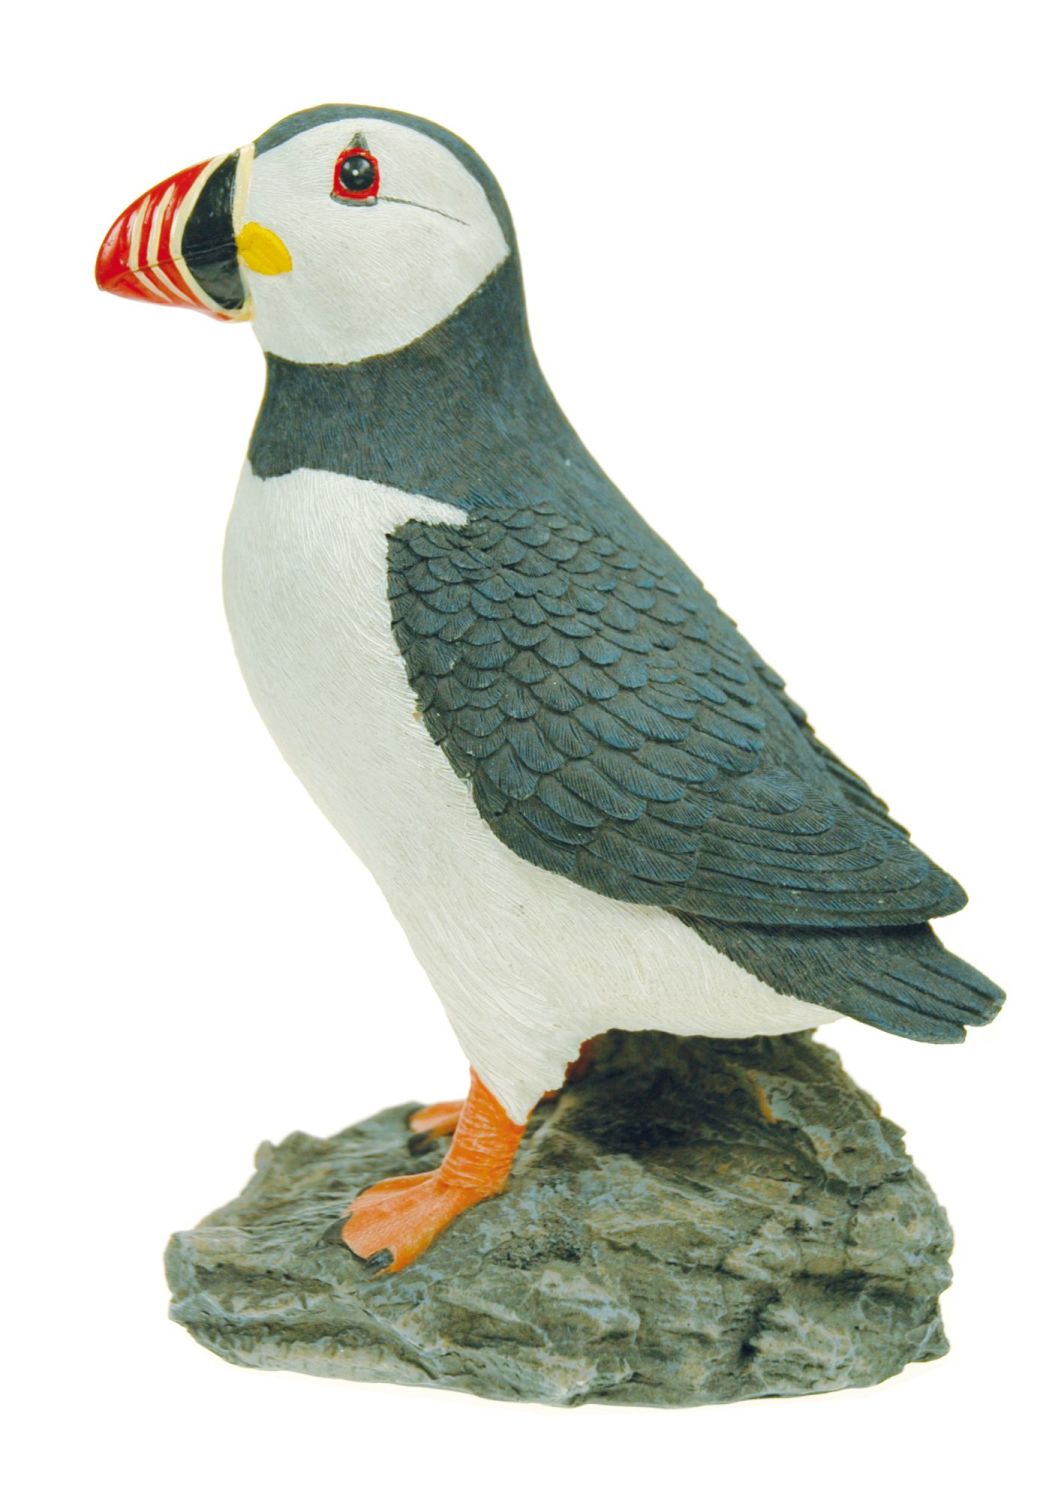 Puffin on a Rock Seabird Ornament Seaside Beach Decor Figurine